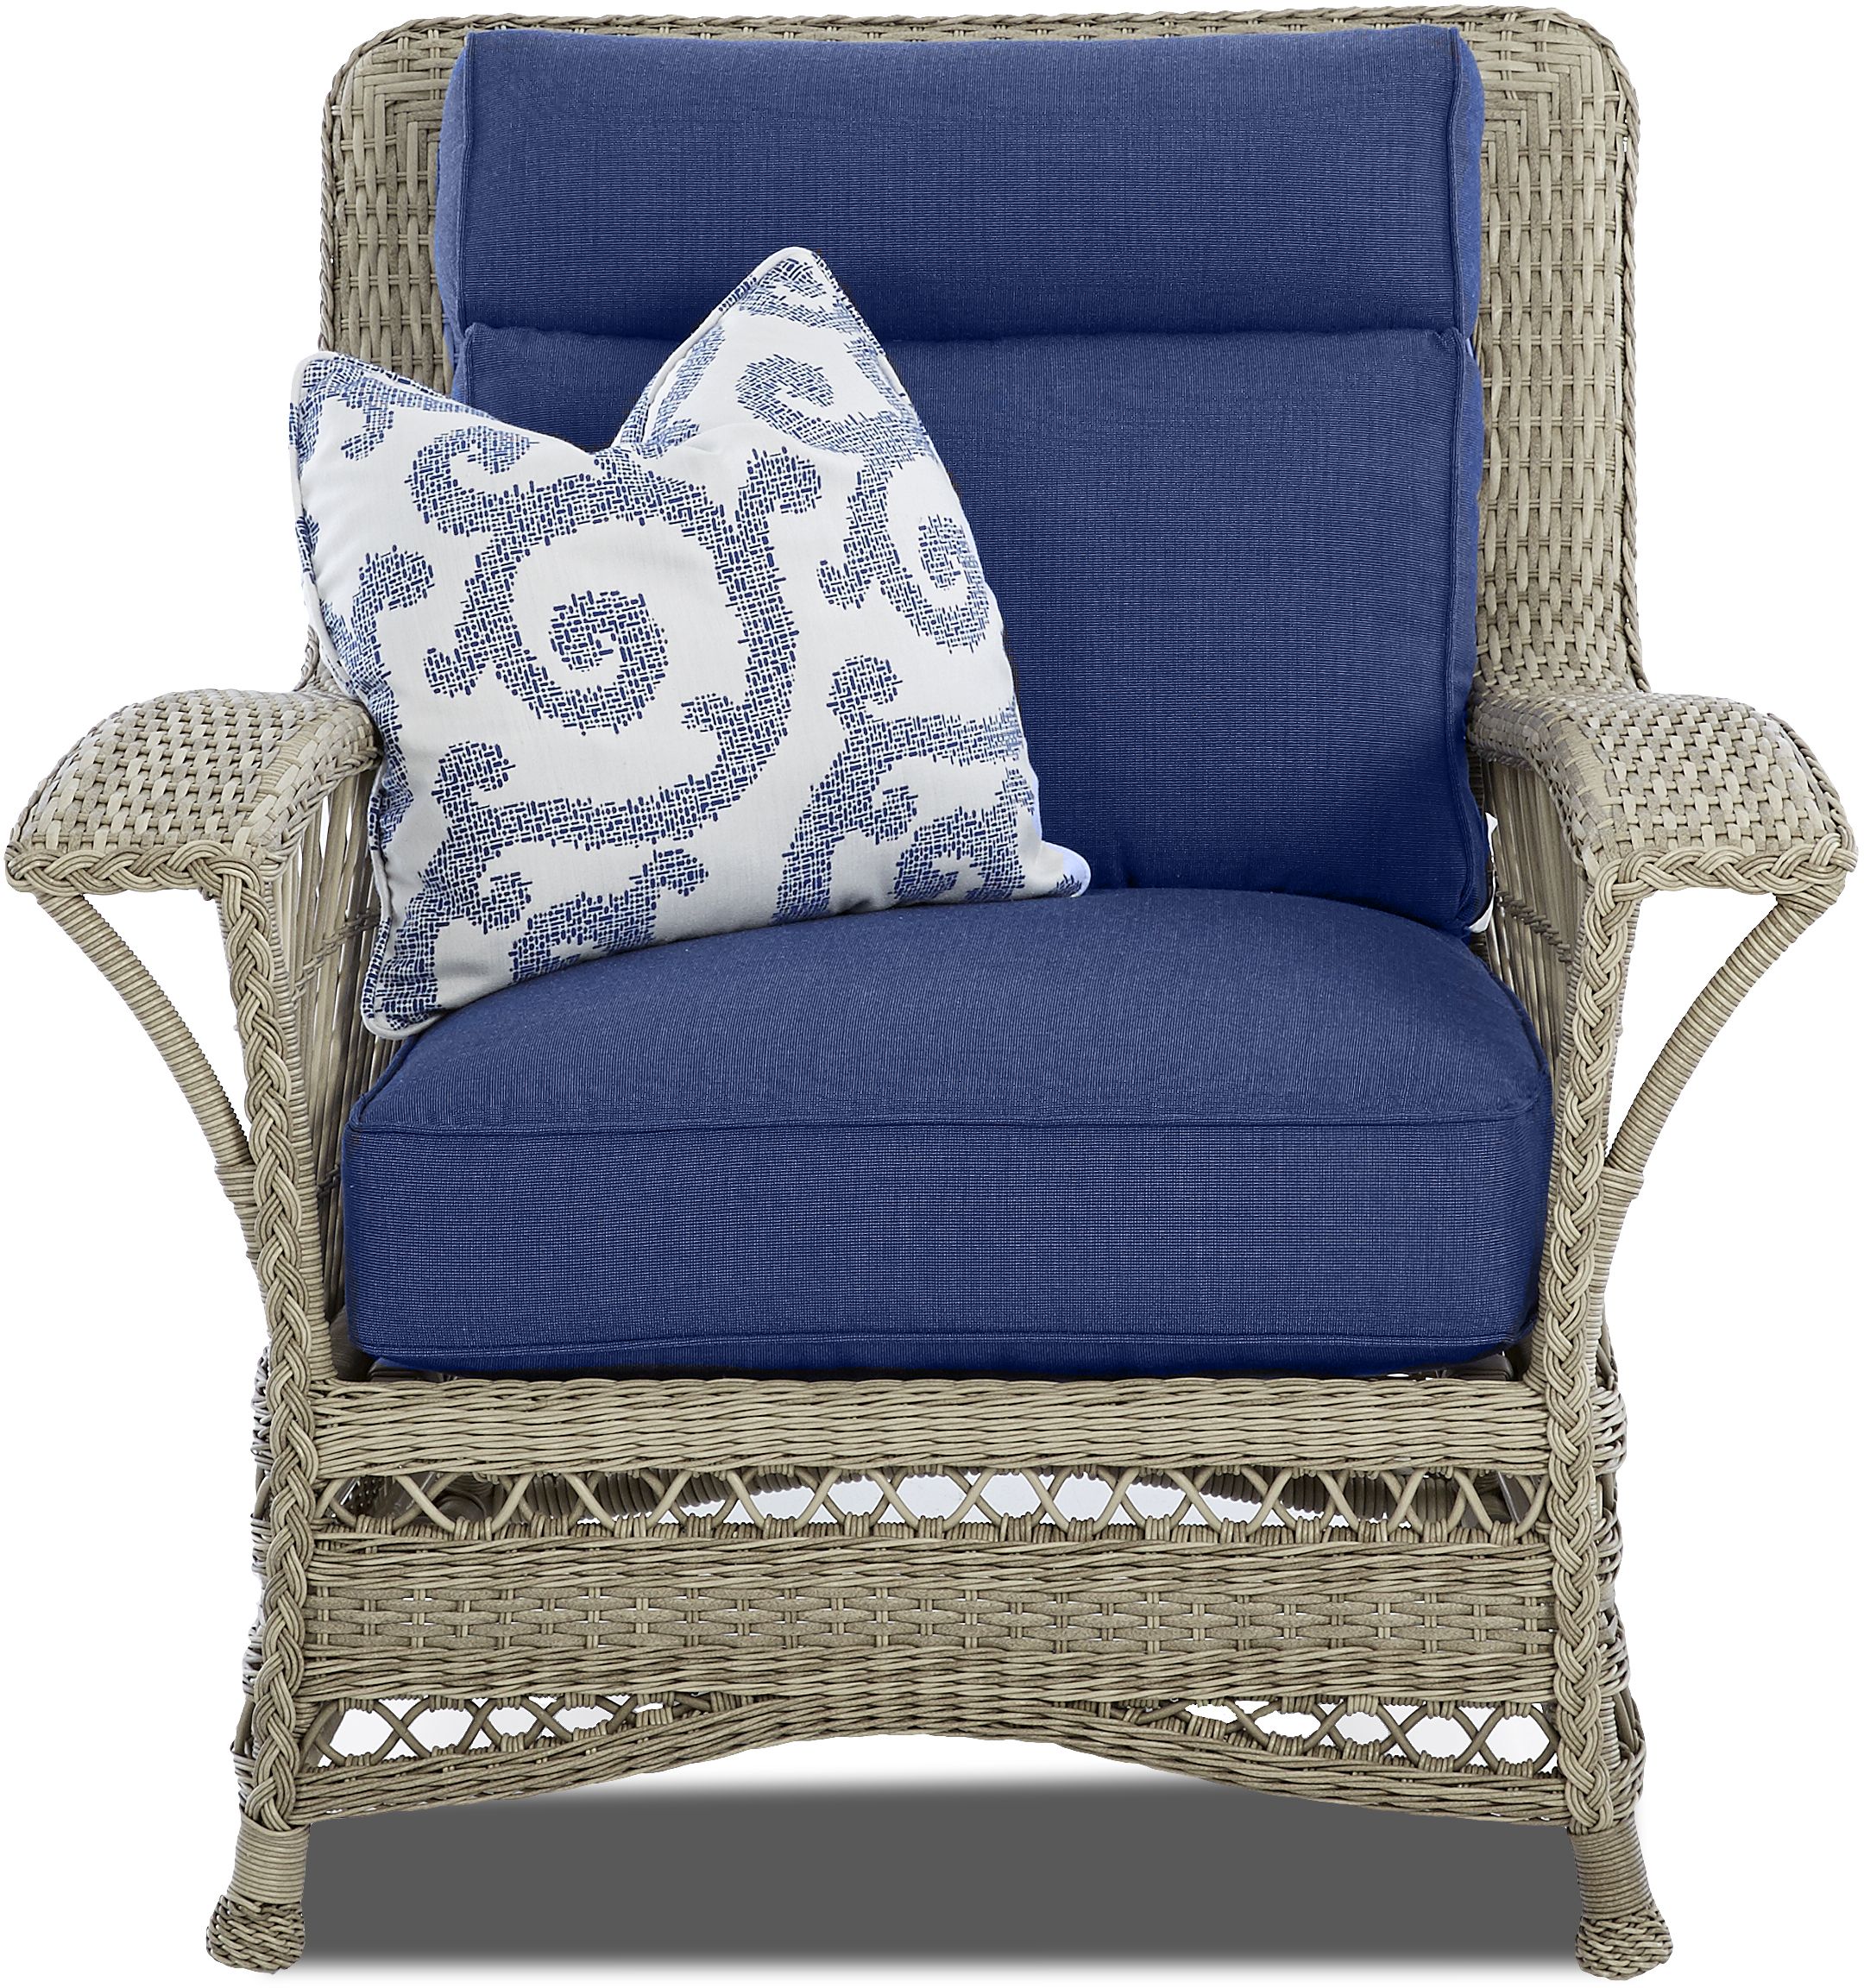 Klaussner® Outdoor Willow Chair